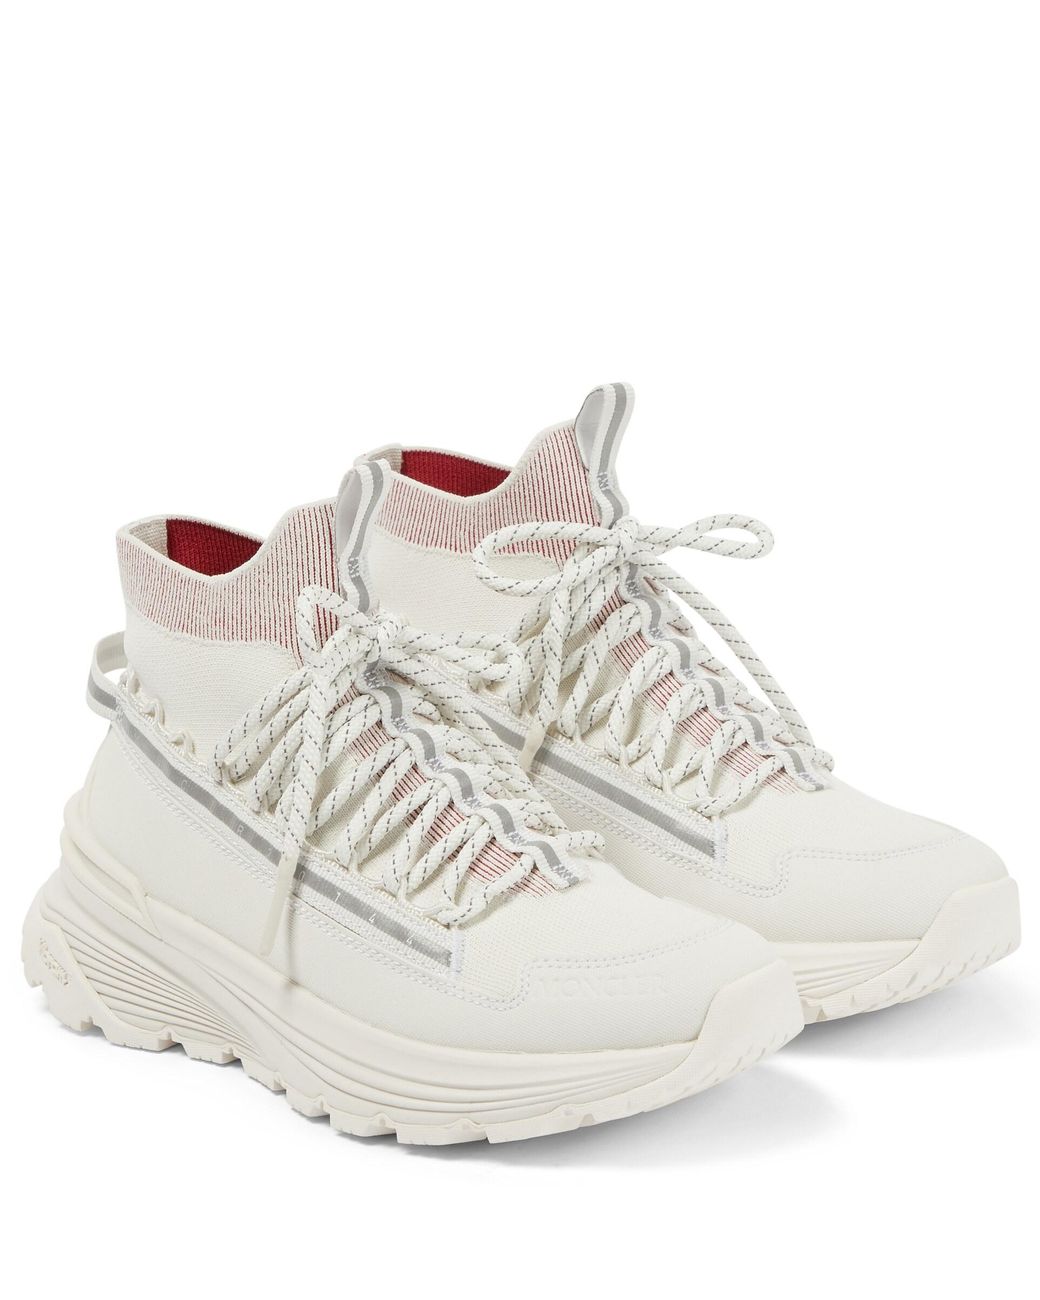 Moncler Monte Runner Sneakers in White | Lyst